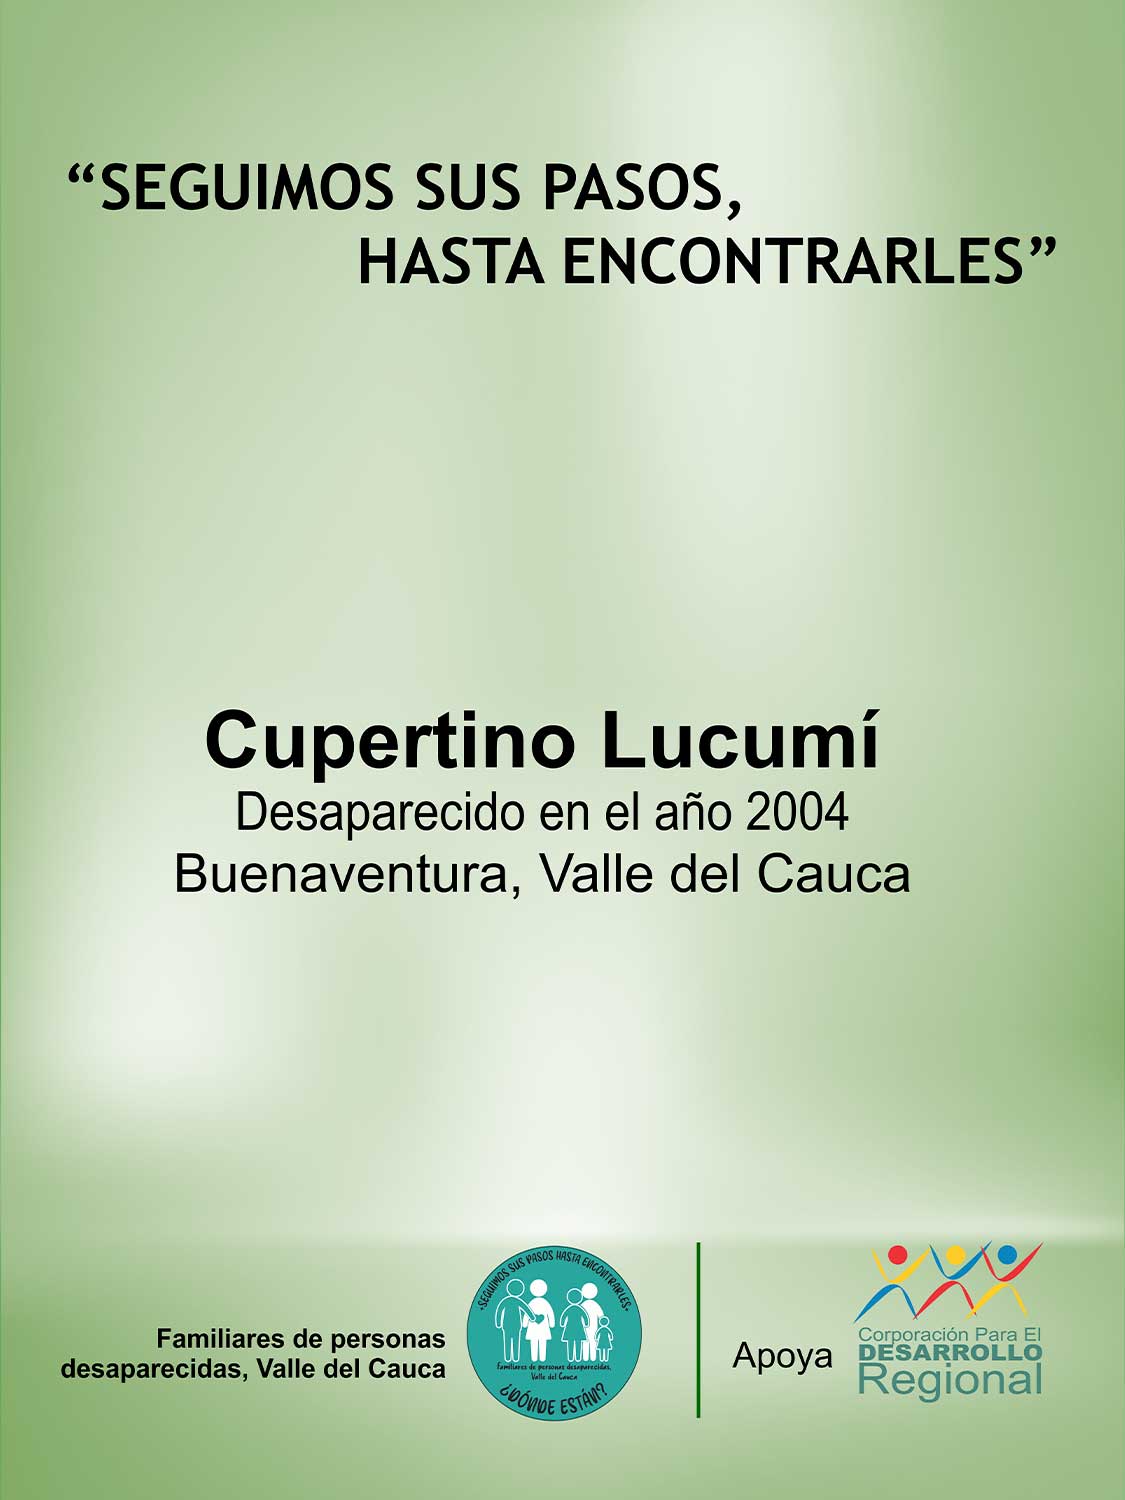 Cupertino Lucumí